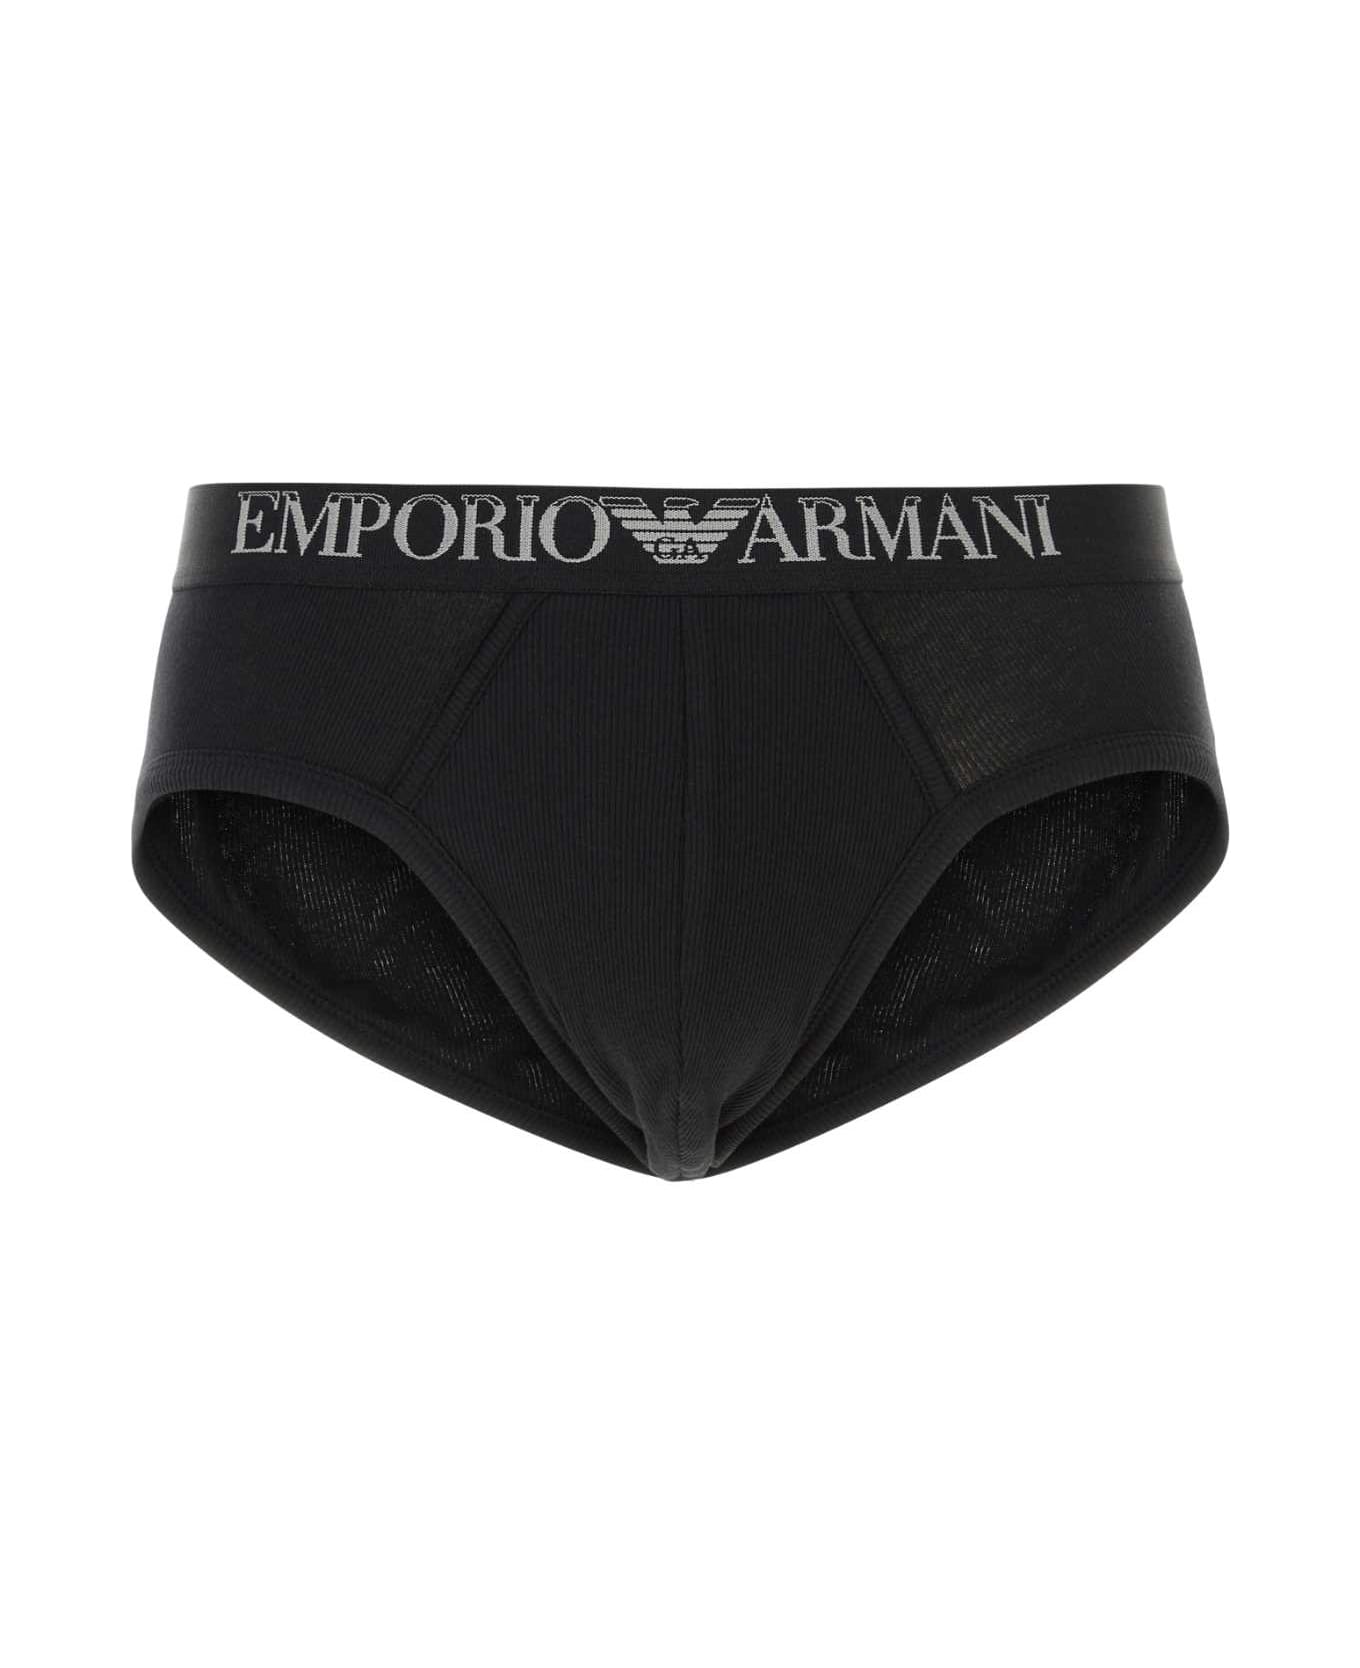 Emporio Armani Black Stretch Cotton Brief Set - 07320